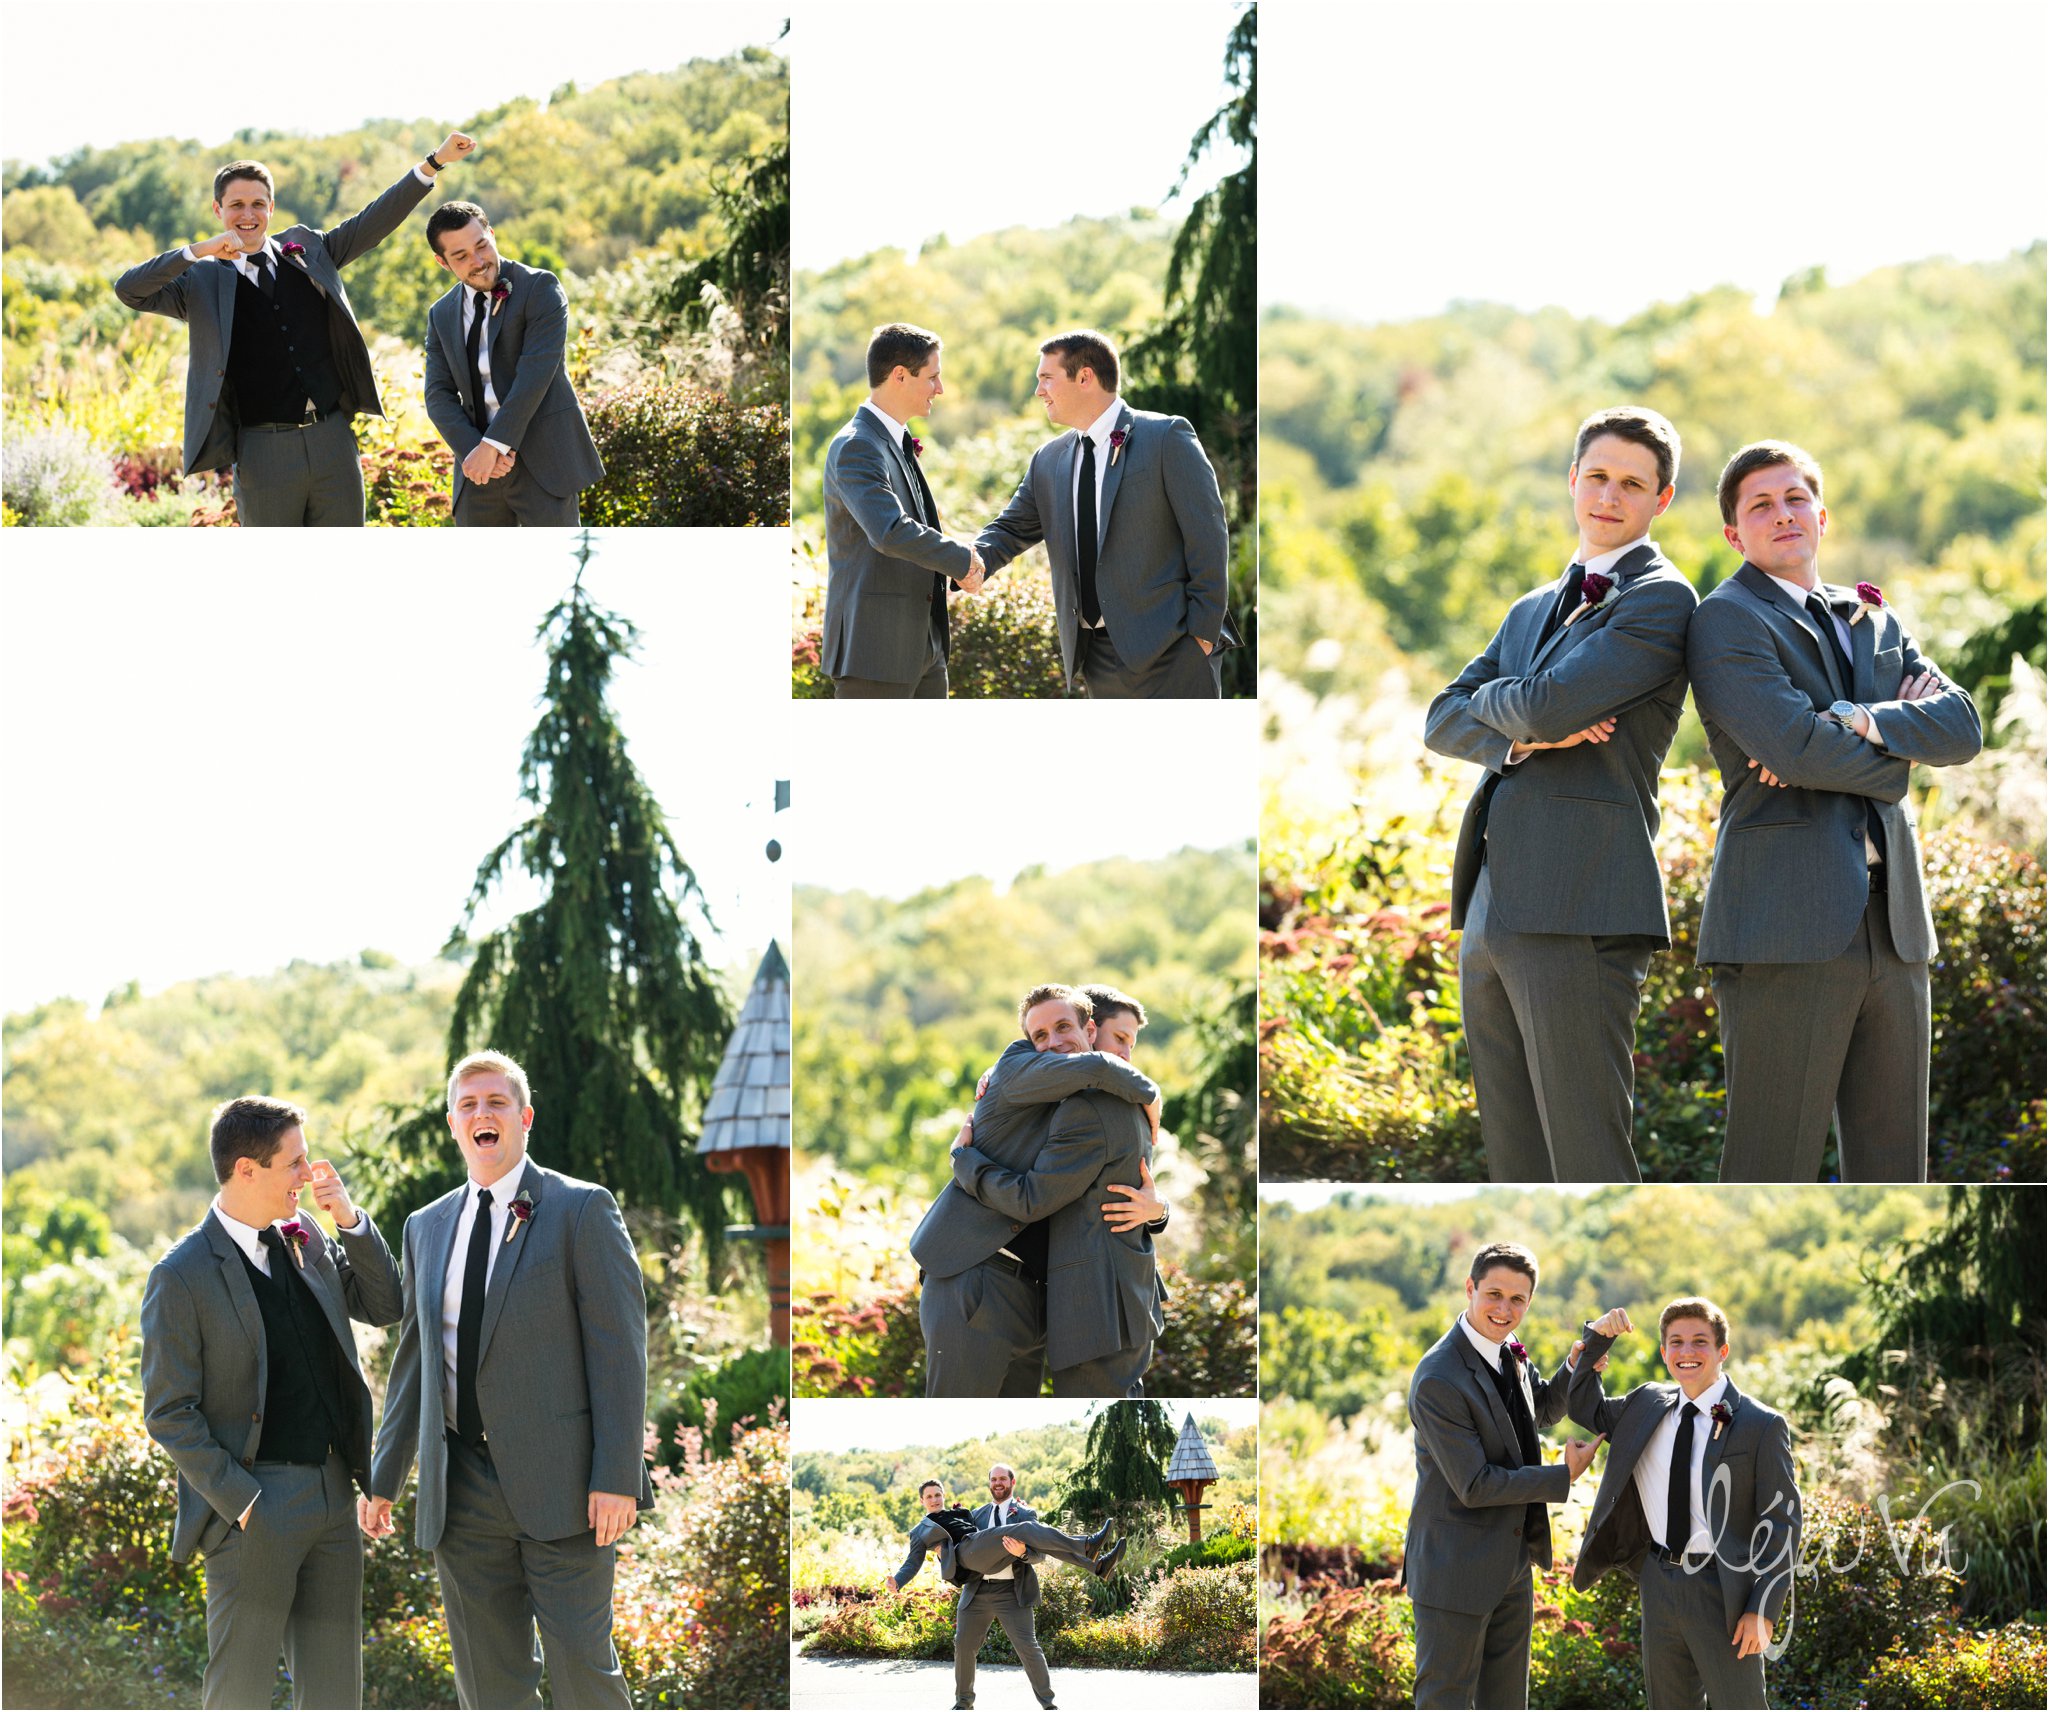 Shadow Glen Country Club Wedding | groom with groomsmen | Images by: www.feliciathephotographer.com